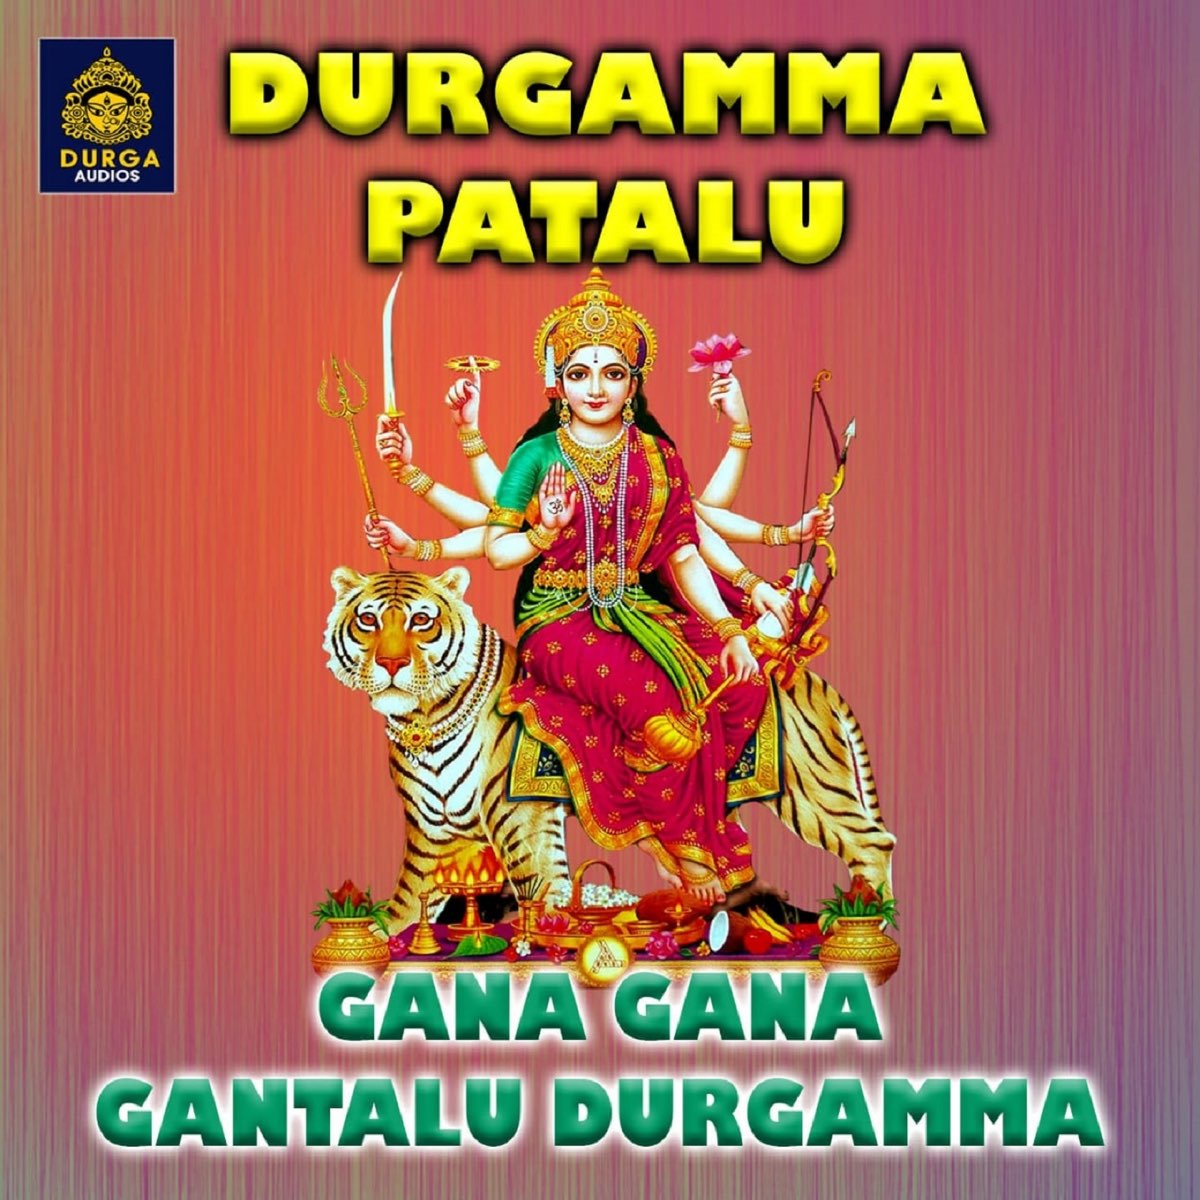 Gana Gana Gantalu Durgamma - Single by V. Anil Kumar on Apple Music